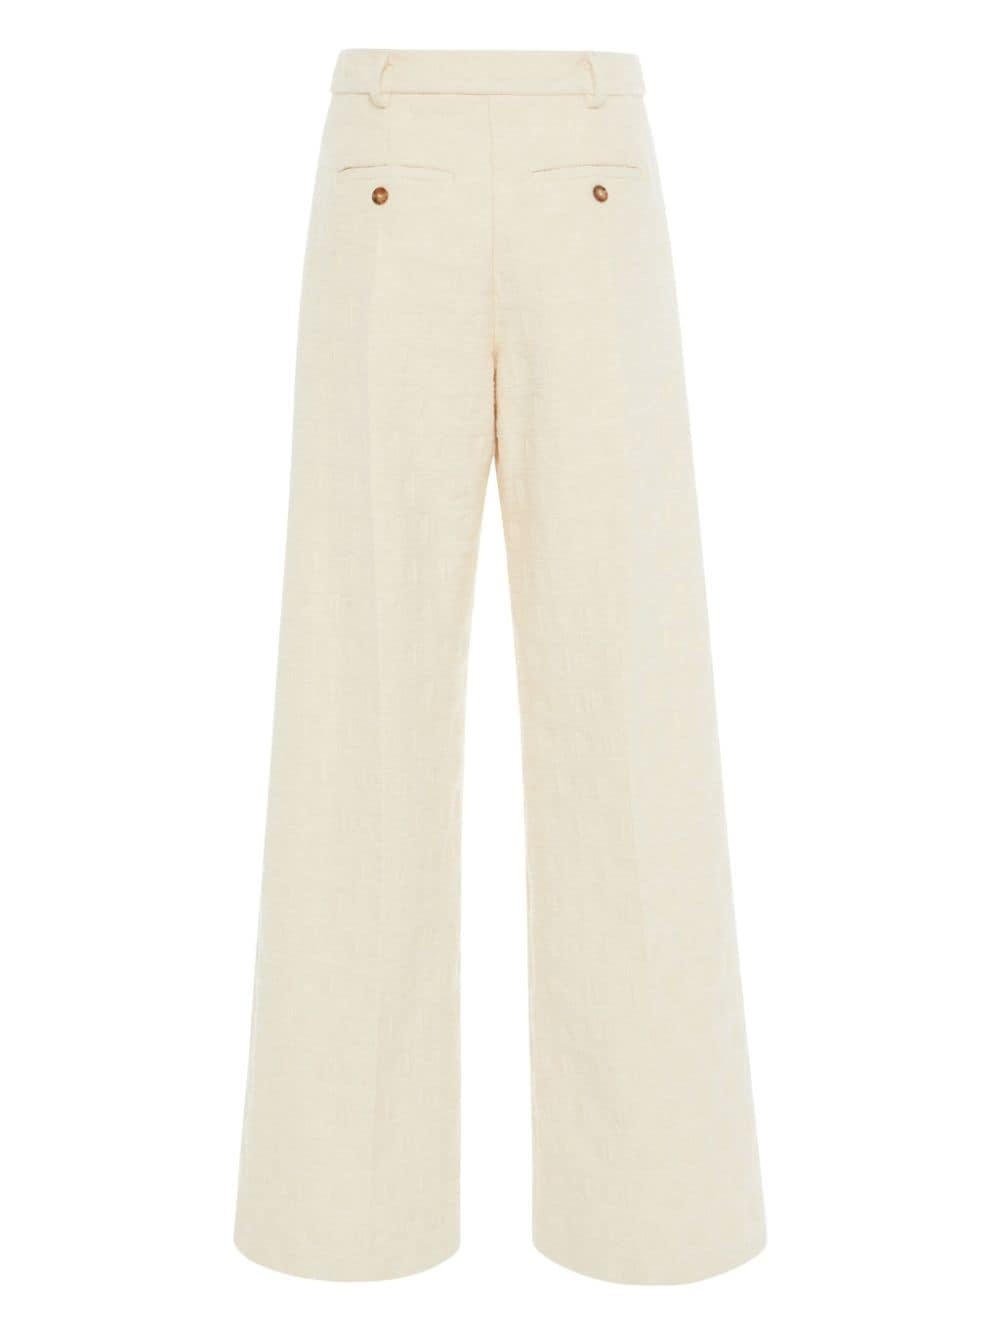 La Comasca jacquard trousers - 5